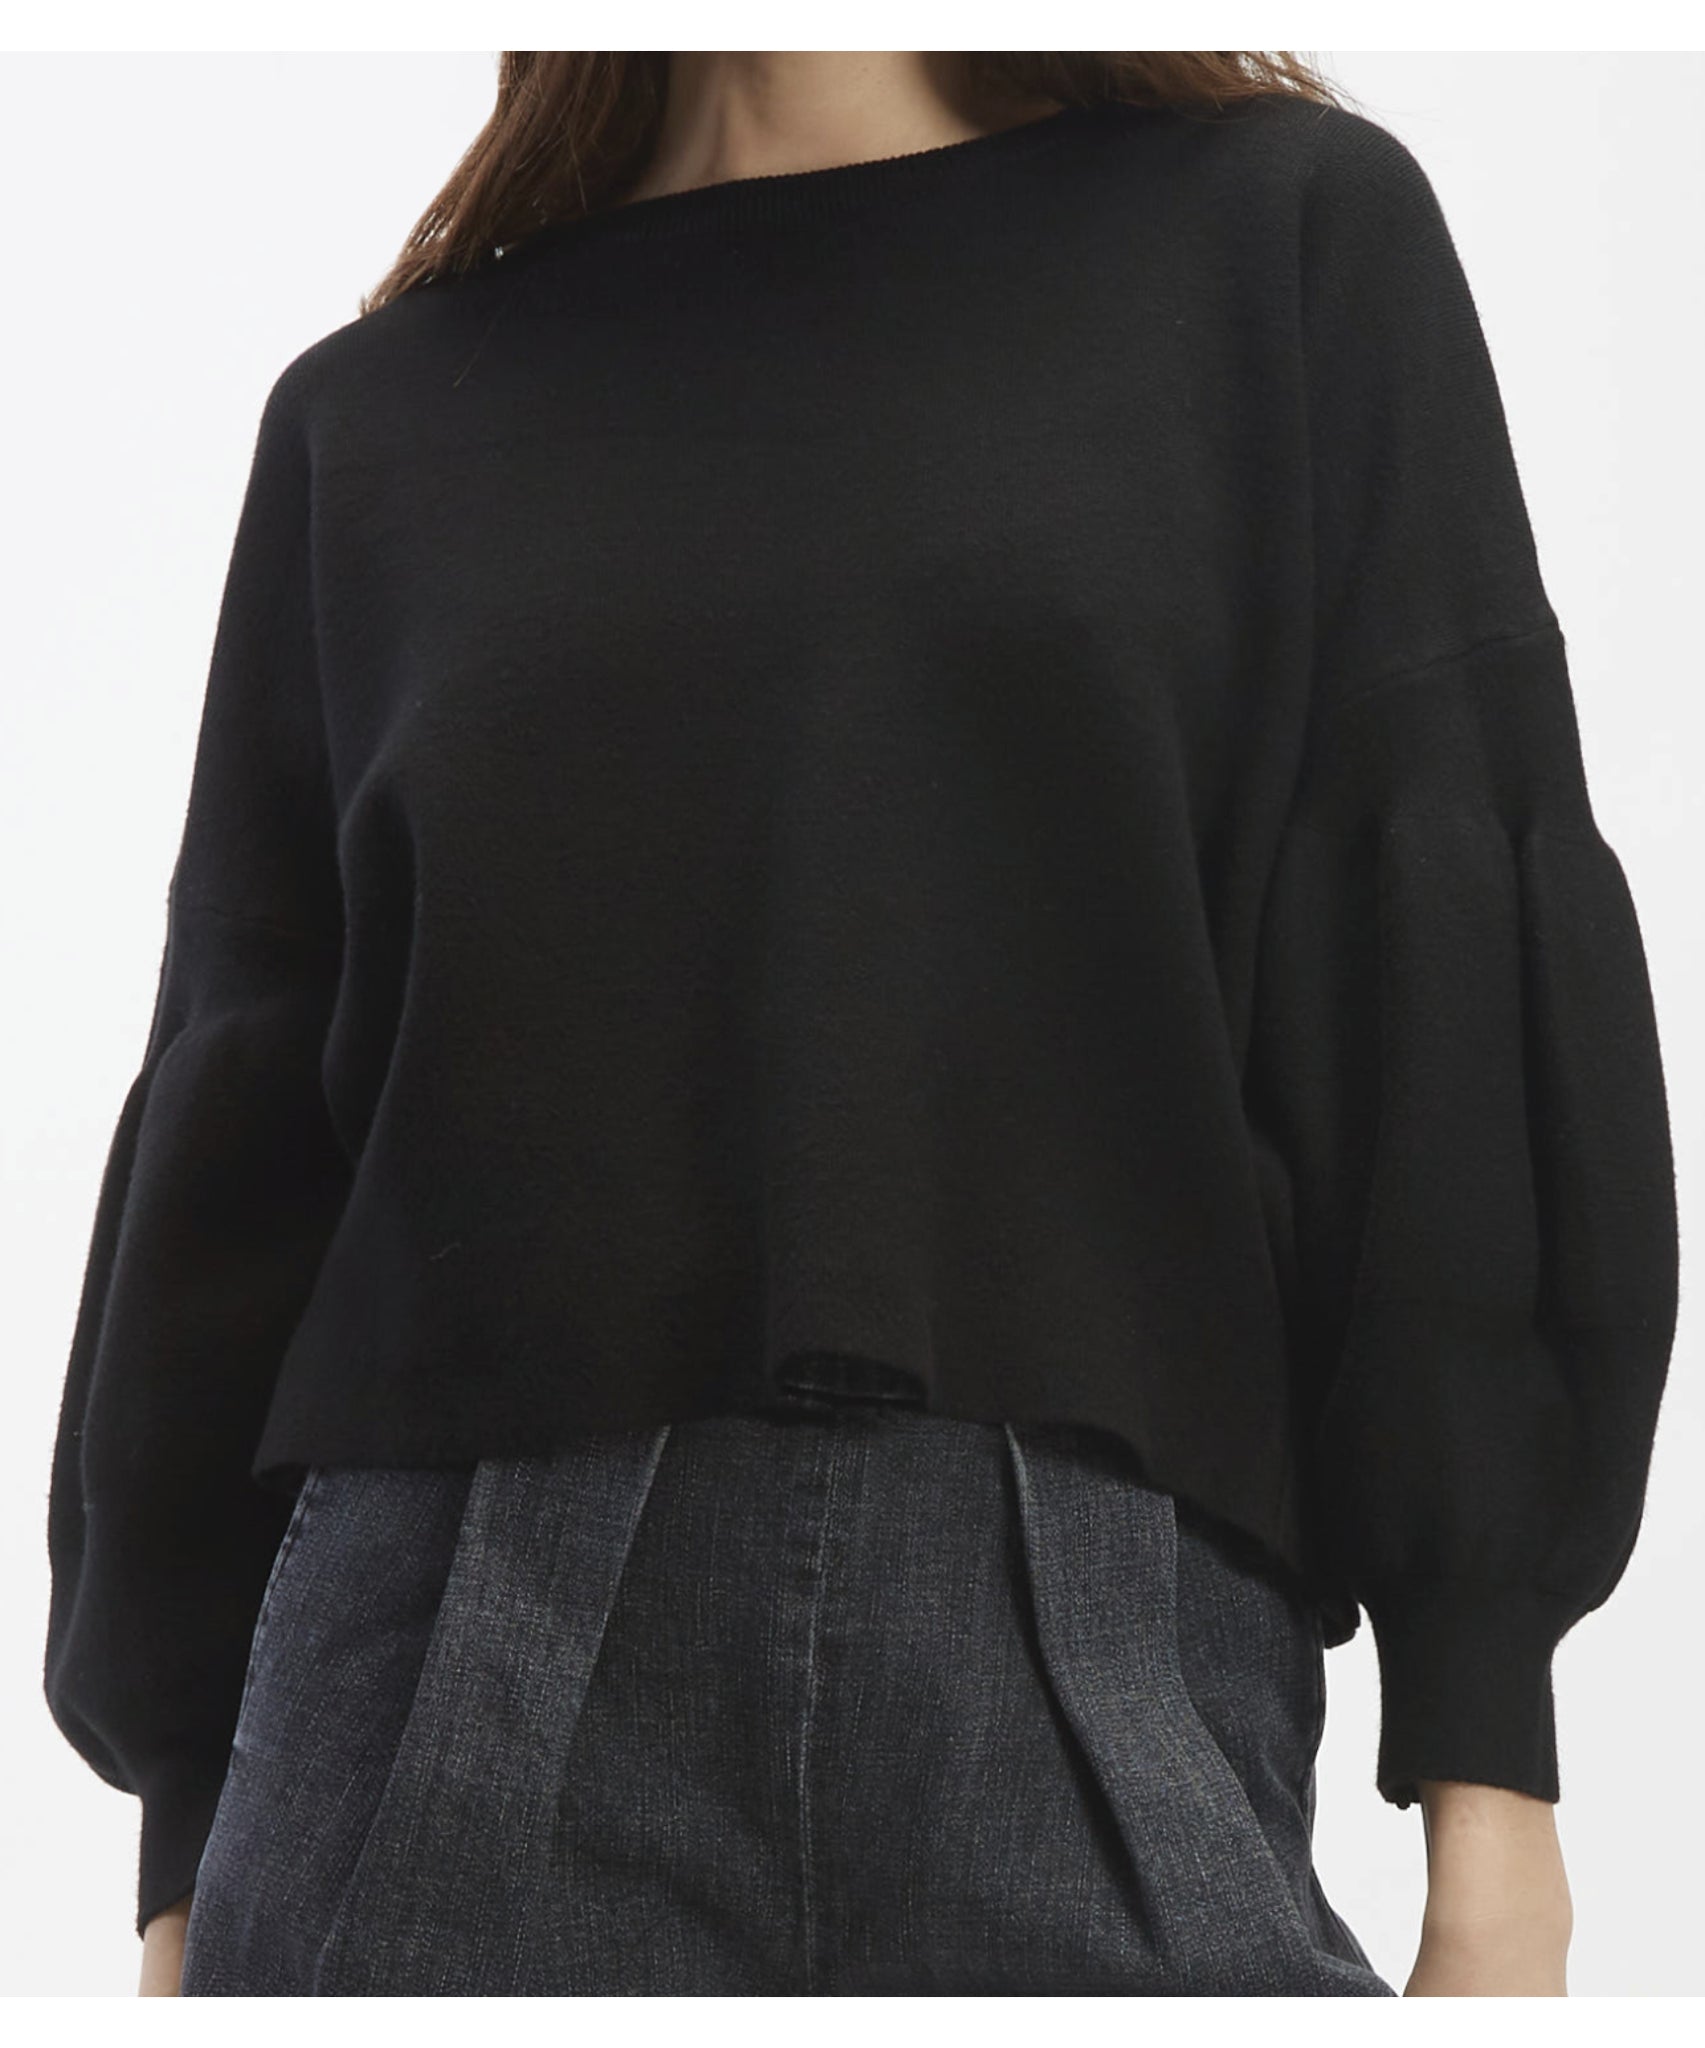 Reese Ballon Sleeve Sweater - Black